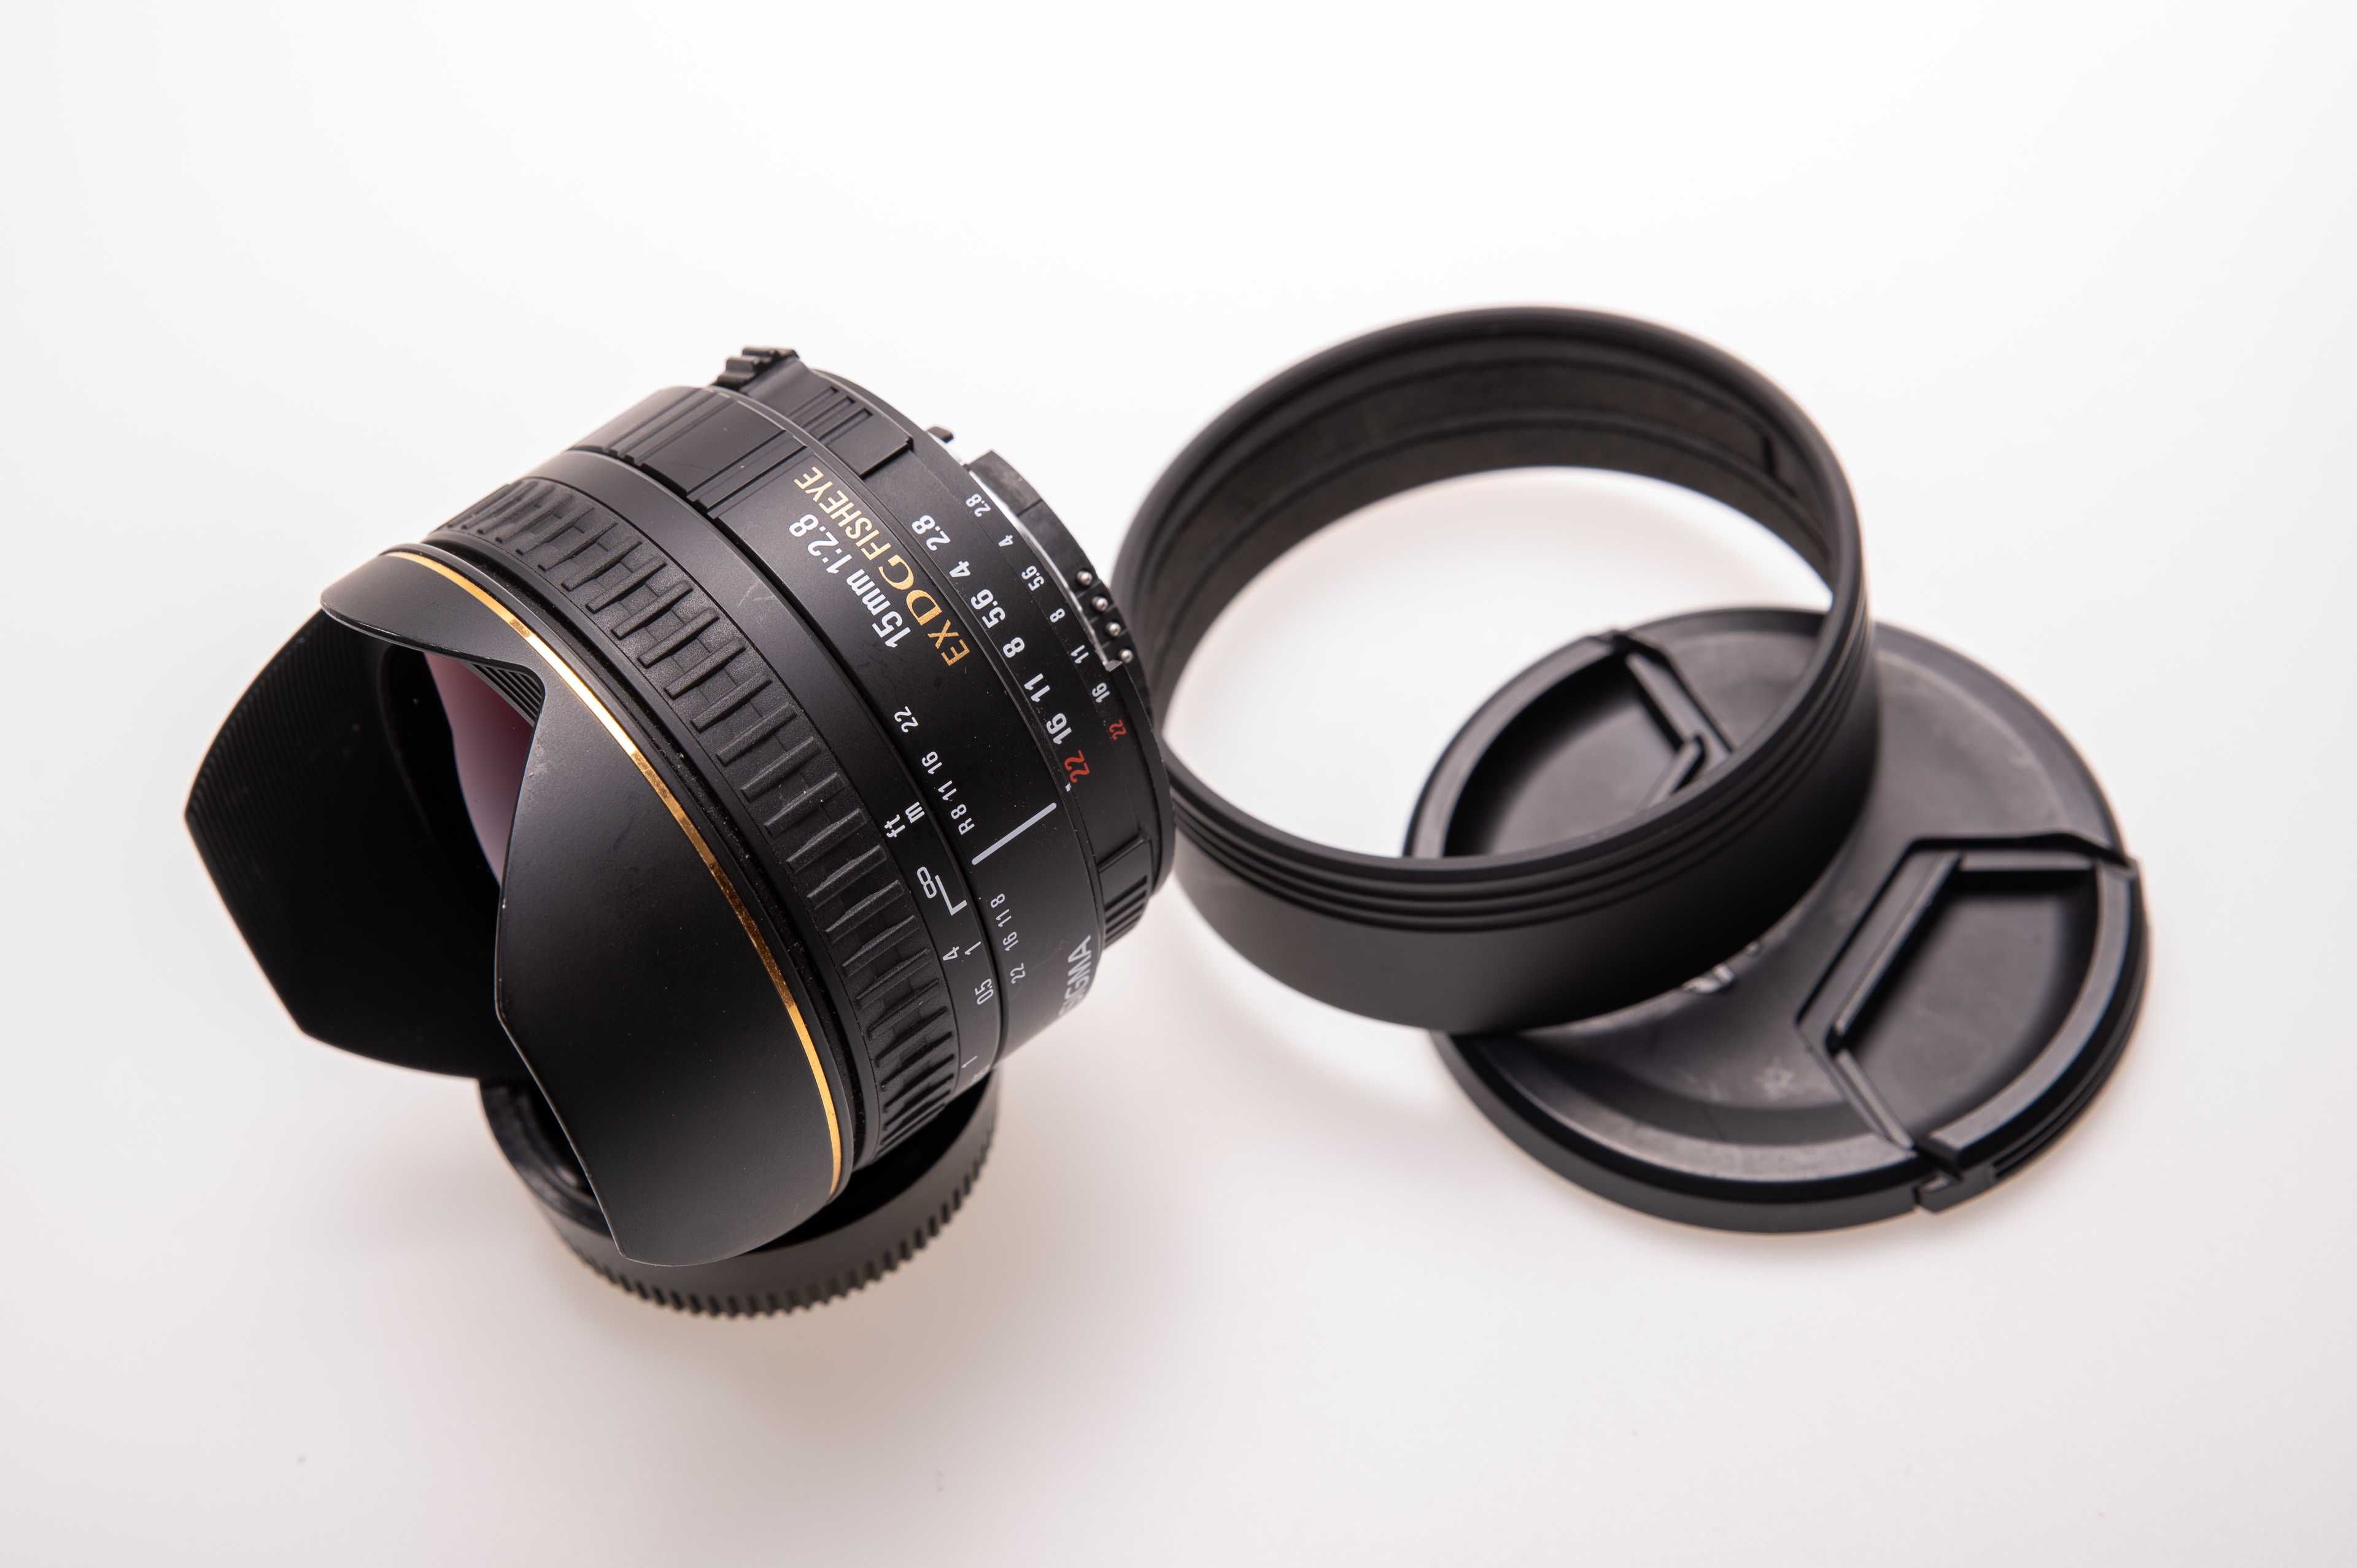 vand obiectiv Sigma 15mm f 2.8 fisheye, compatibil Nikon